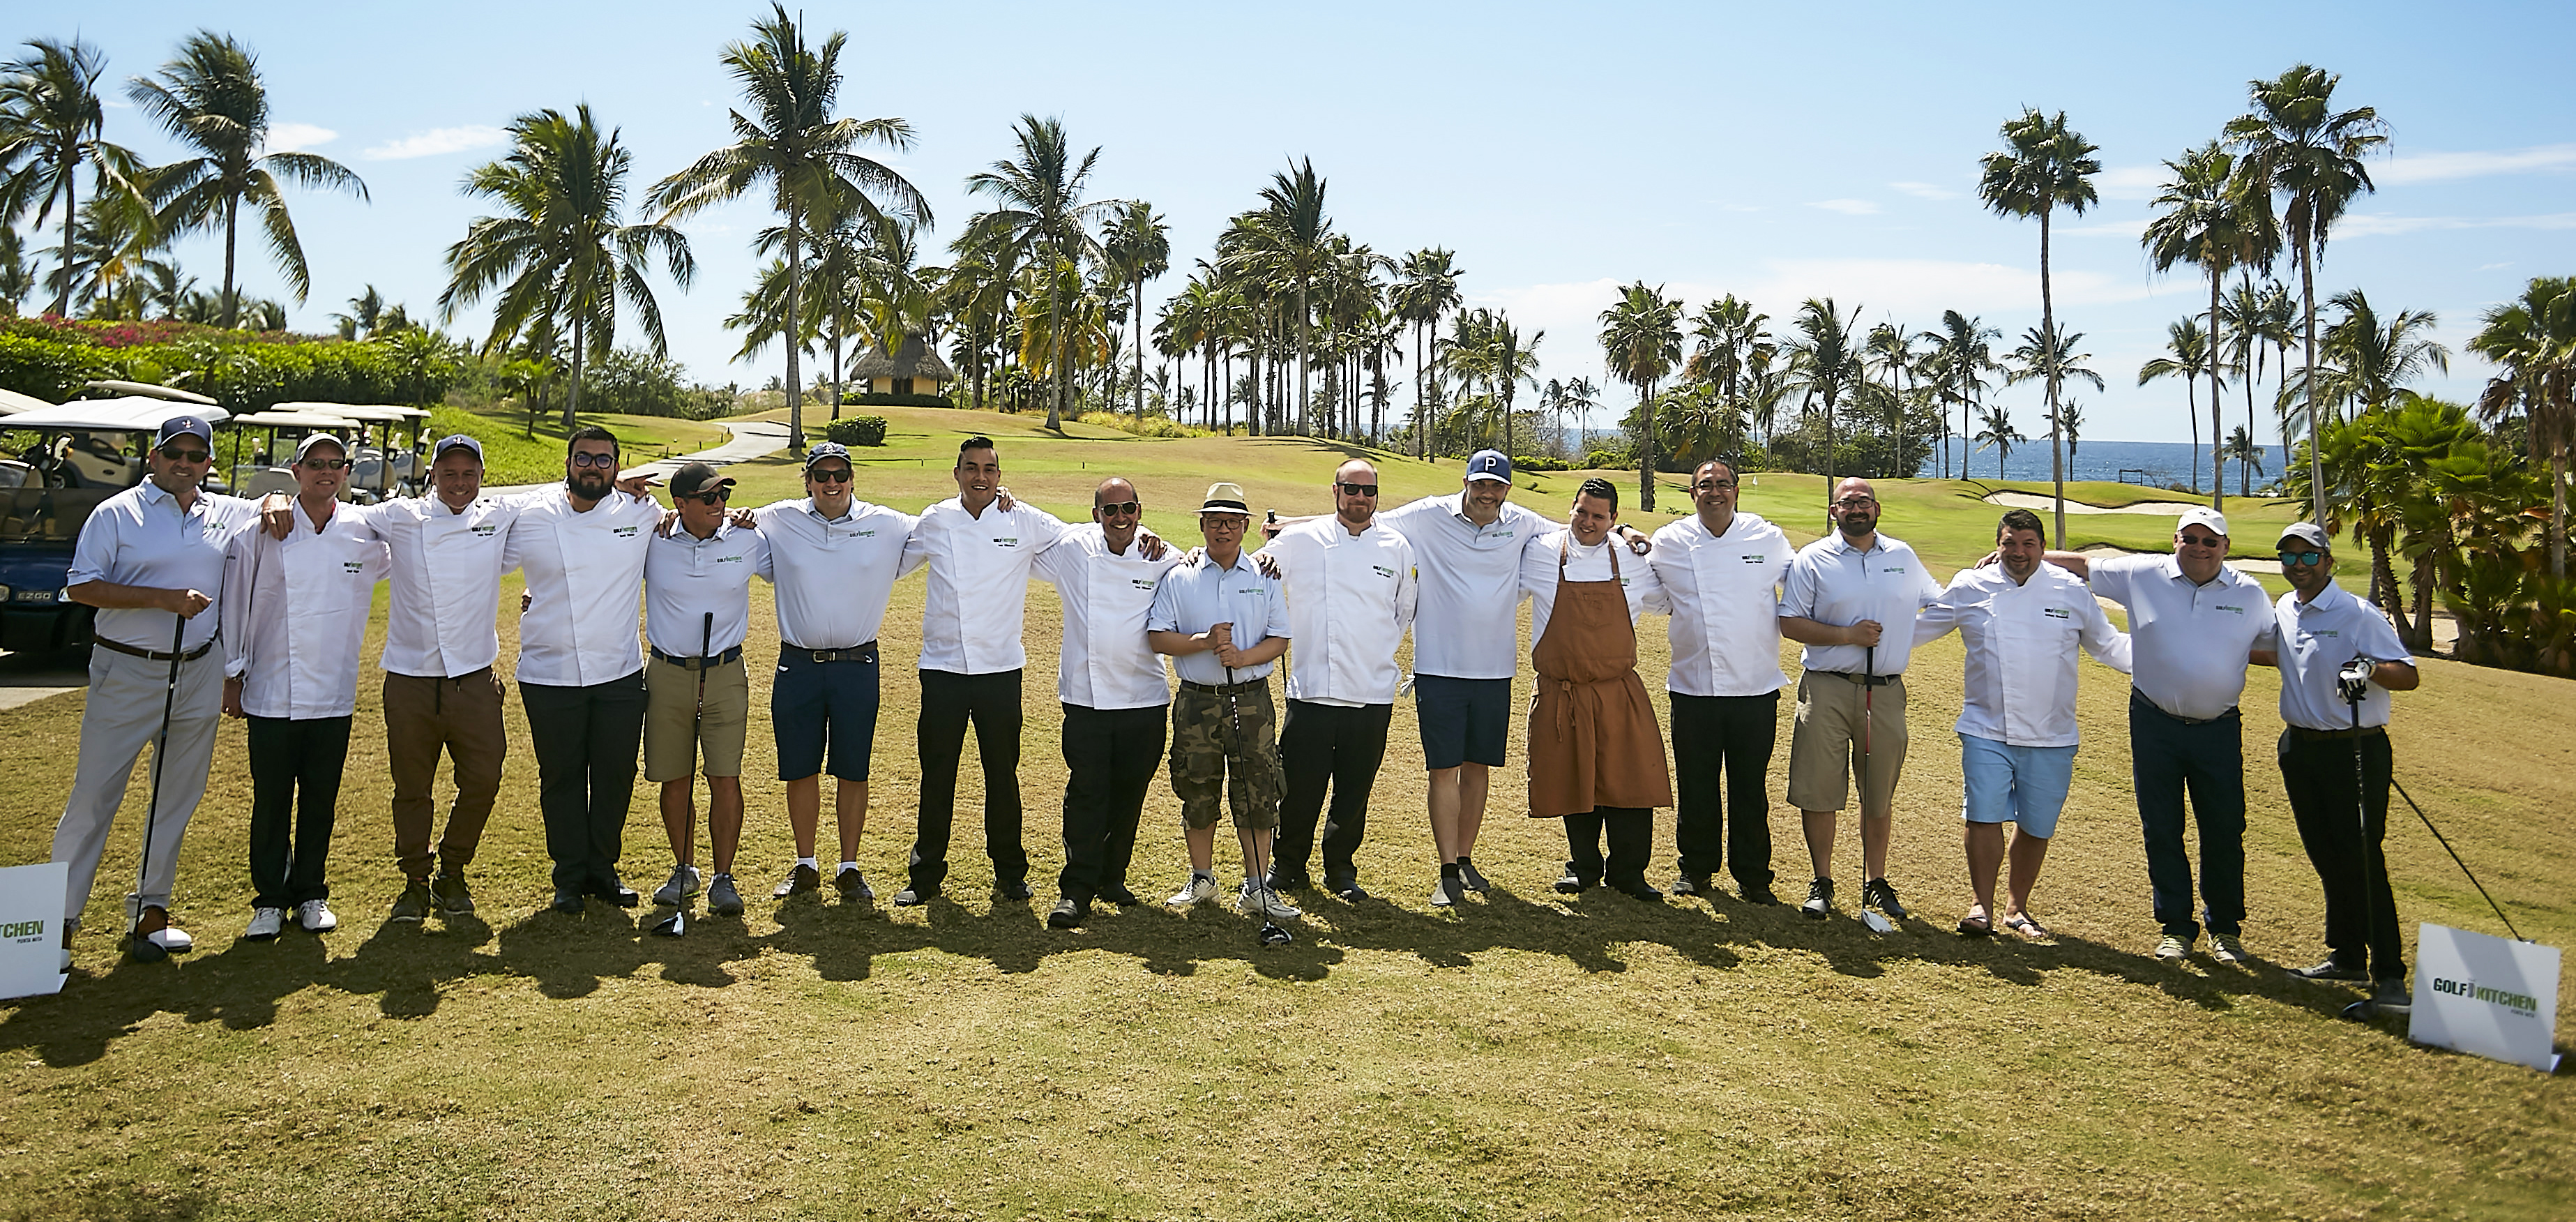 Golf Kitchen Punta Mita Chefs line up to cook and compete.